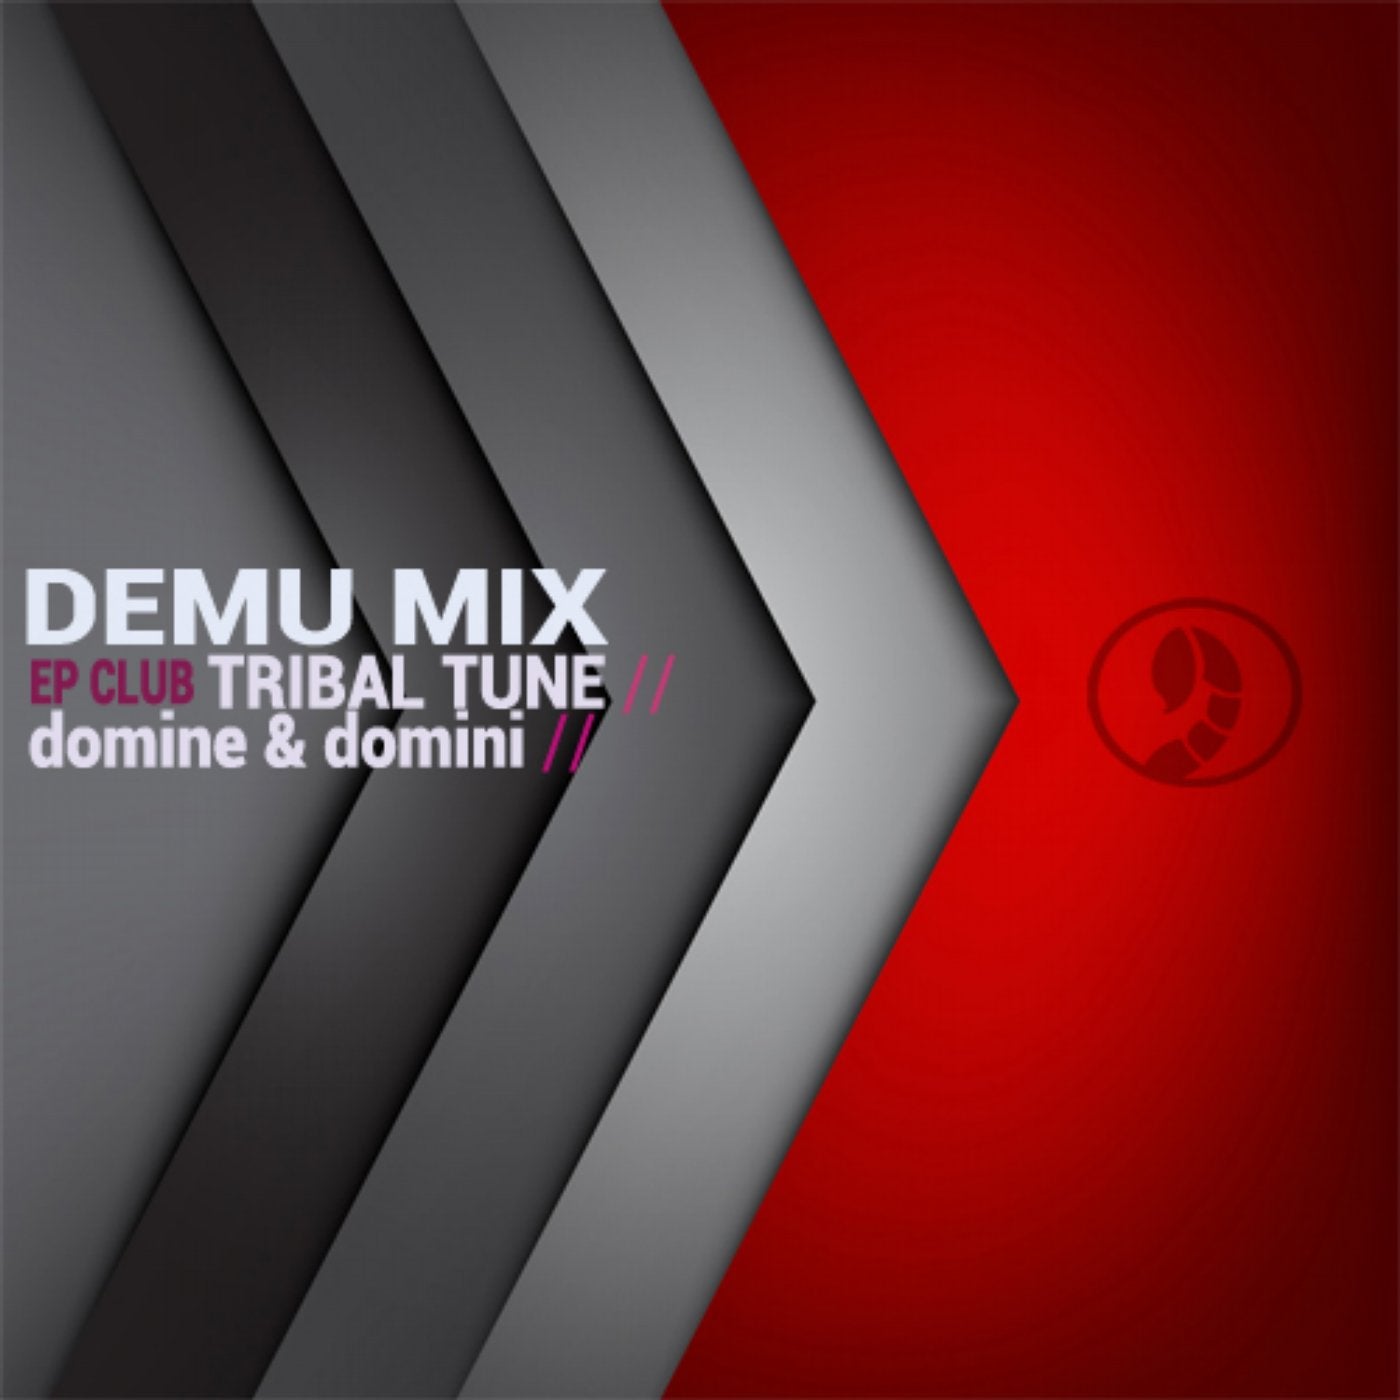 Demu Mix EP